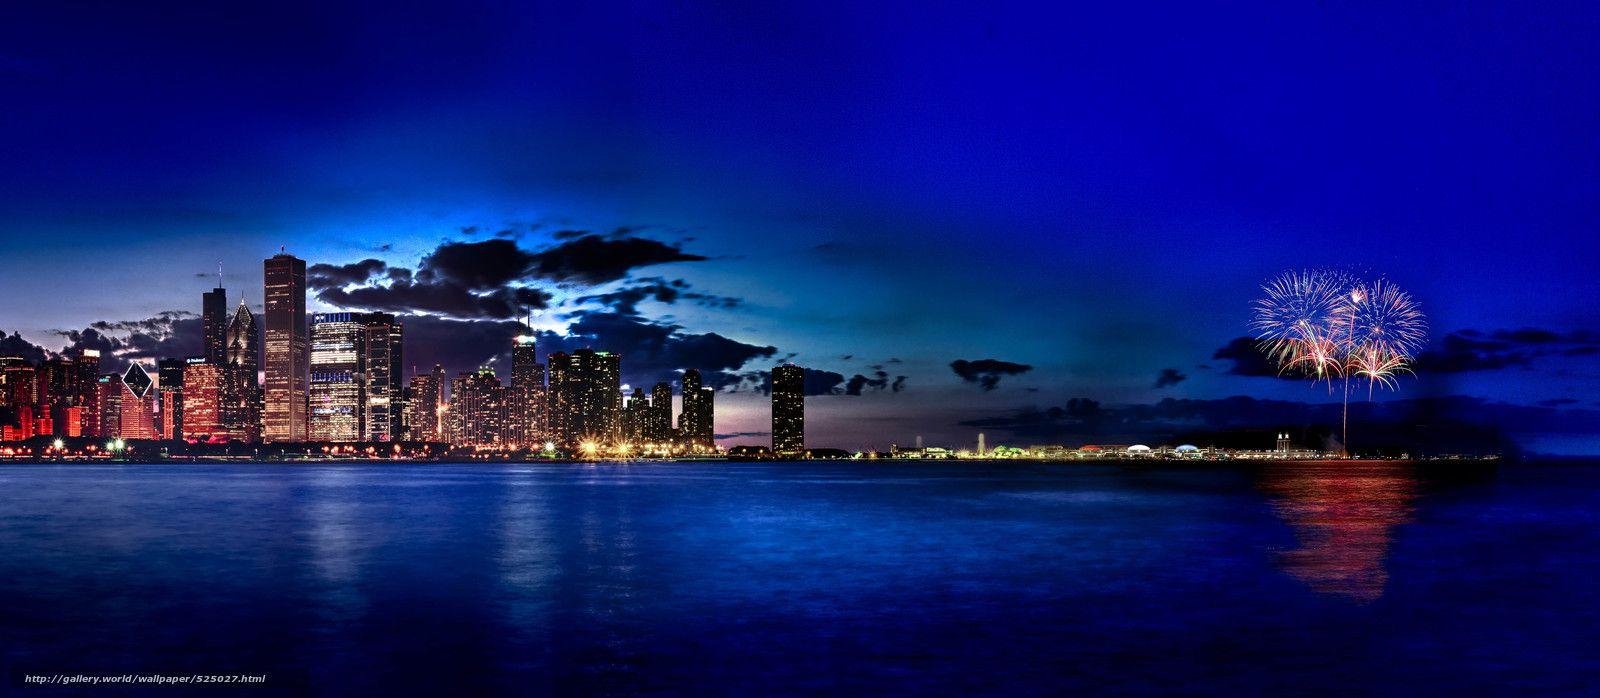 Download wallpaper navy pier, fireworks, Chicago, city free